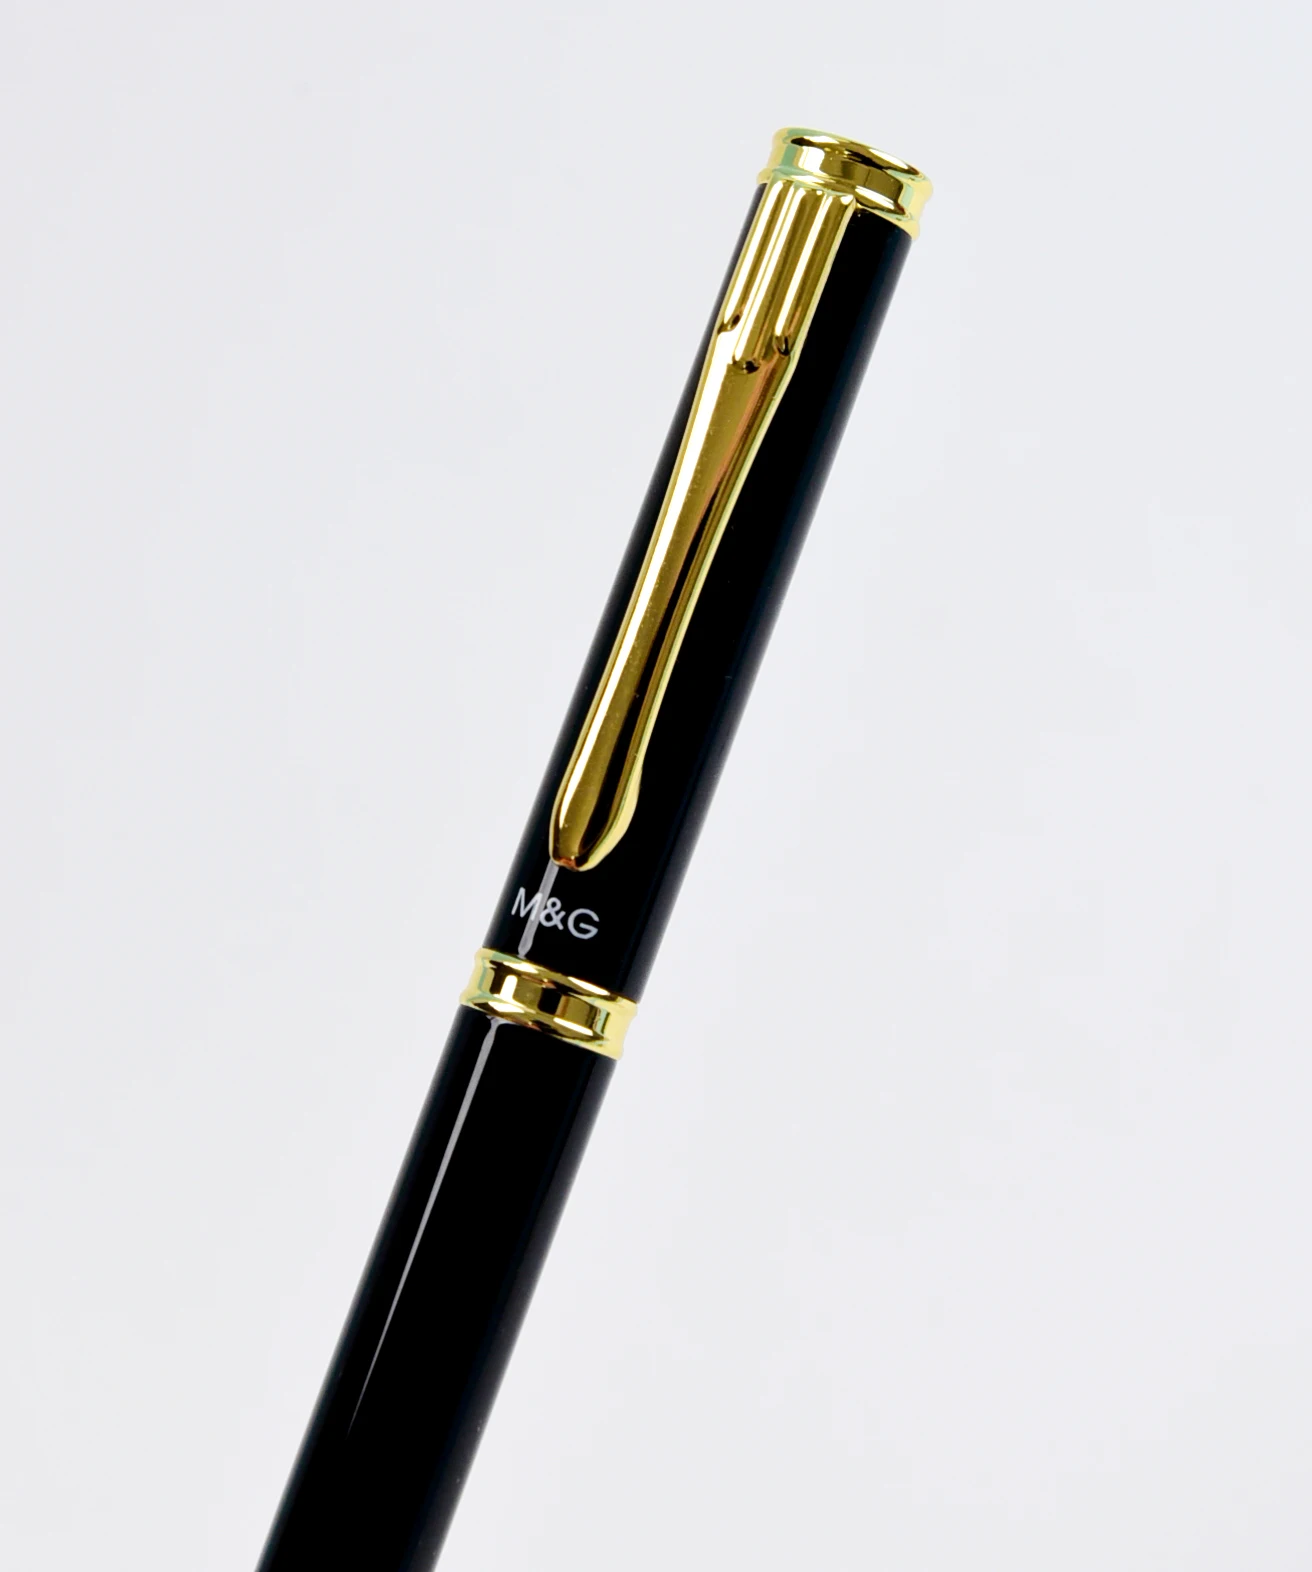 M&GFountain pen water pen pearlescent crown bag tip practice calligraphy office student pen AFP43105